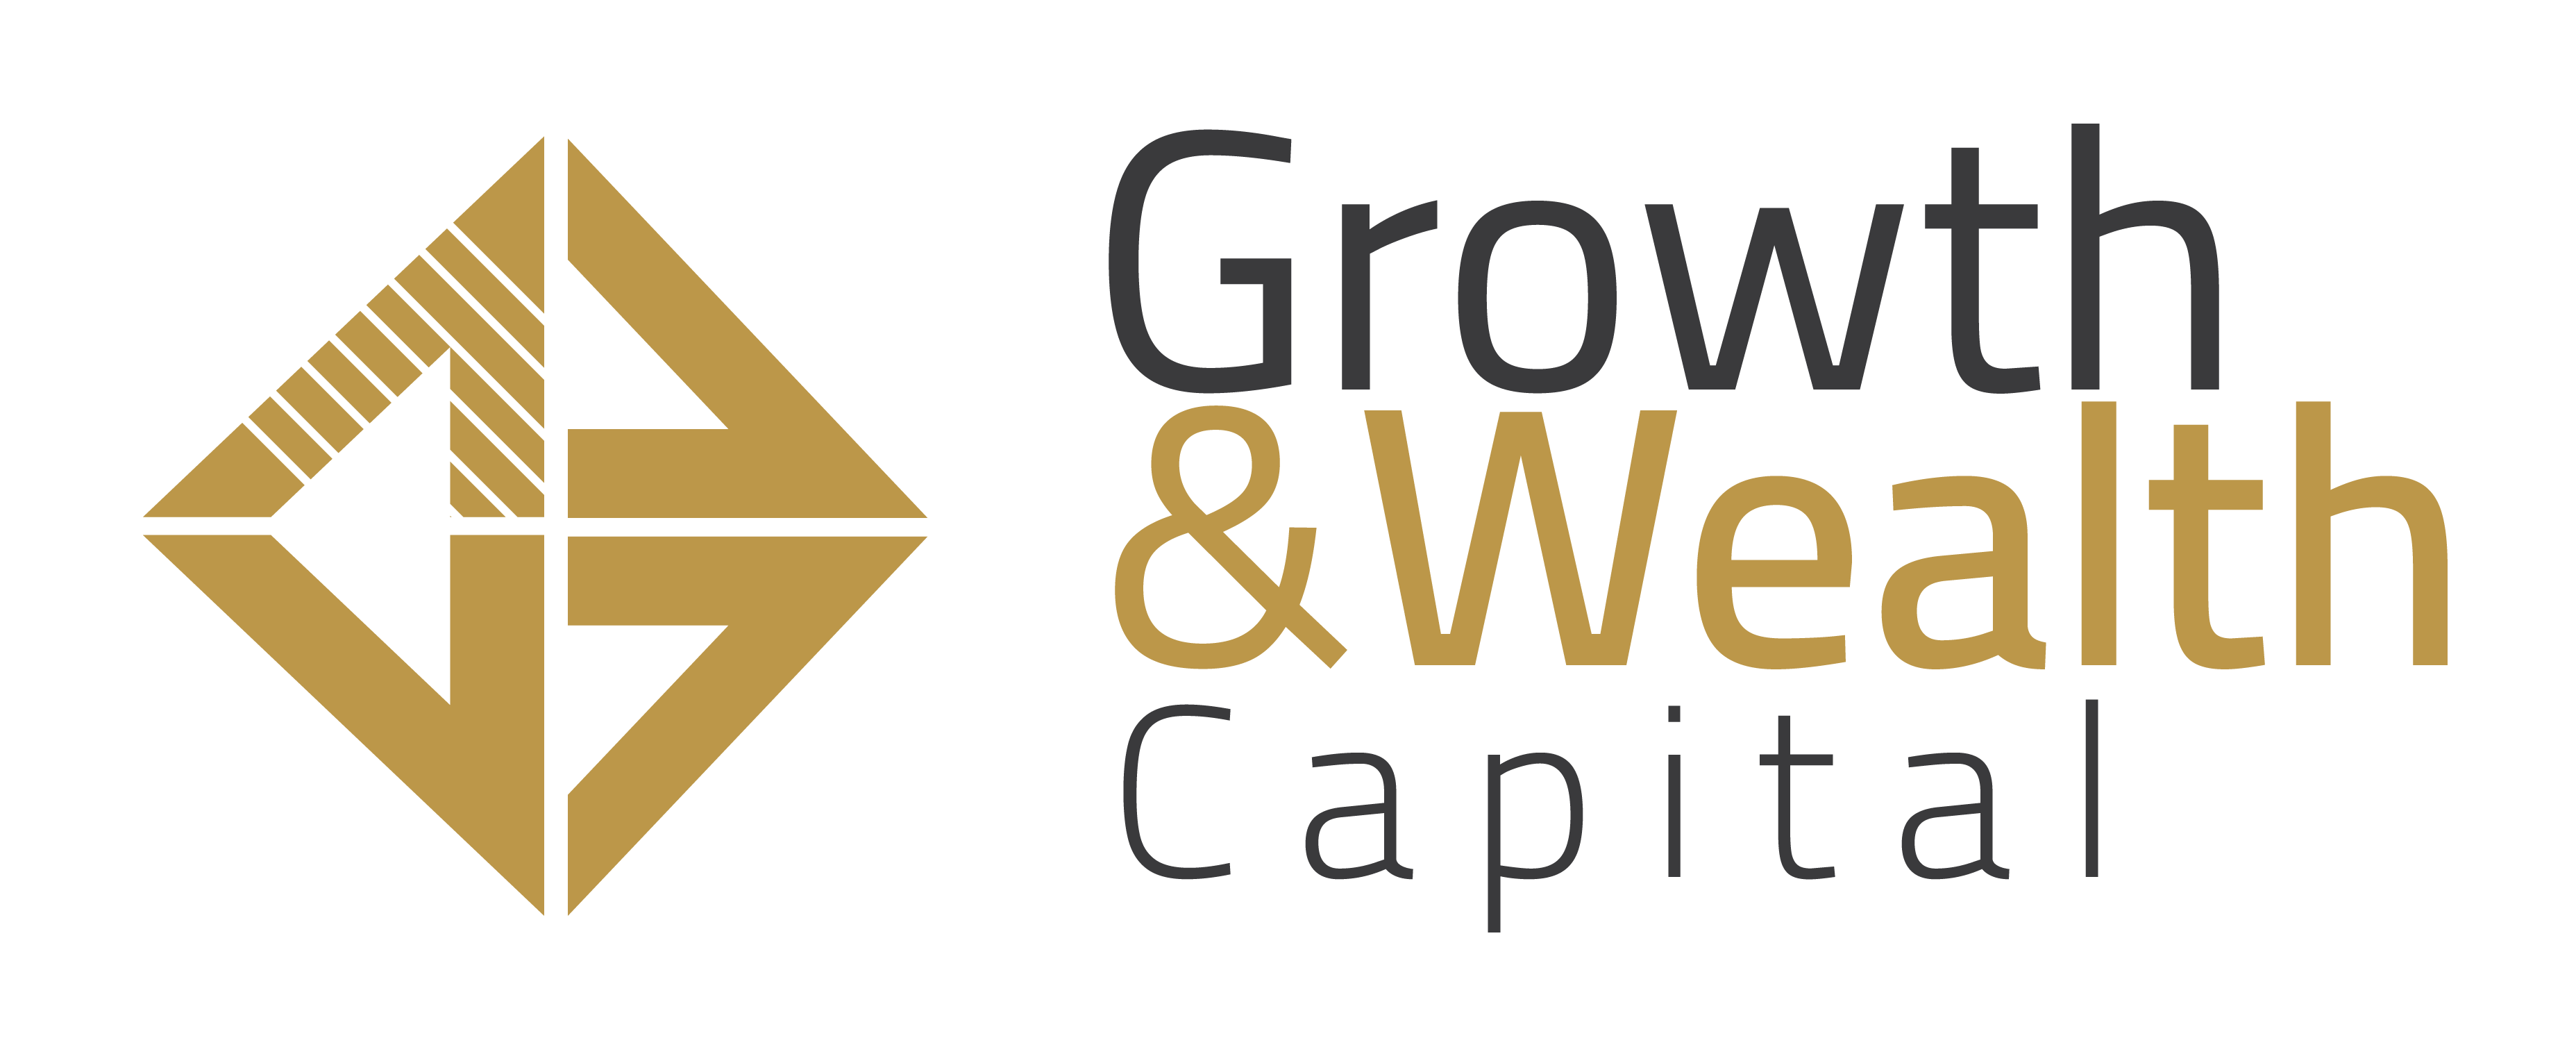 Growth & Wealth Capital